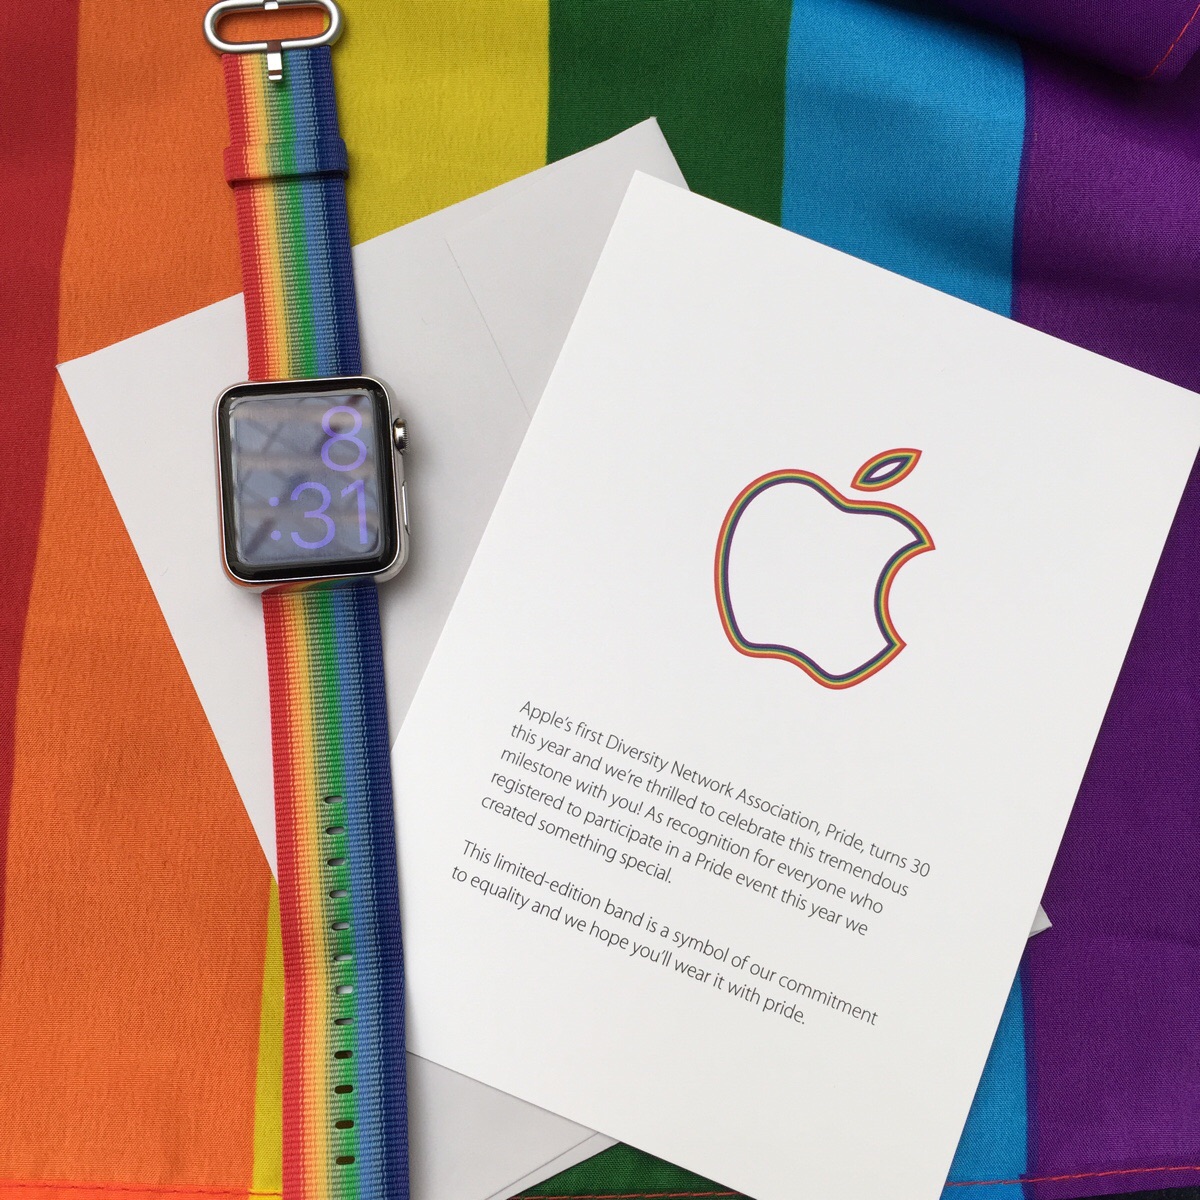 Apple Creates Limited Edition Rainbow Band for San Francisco Pride